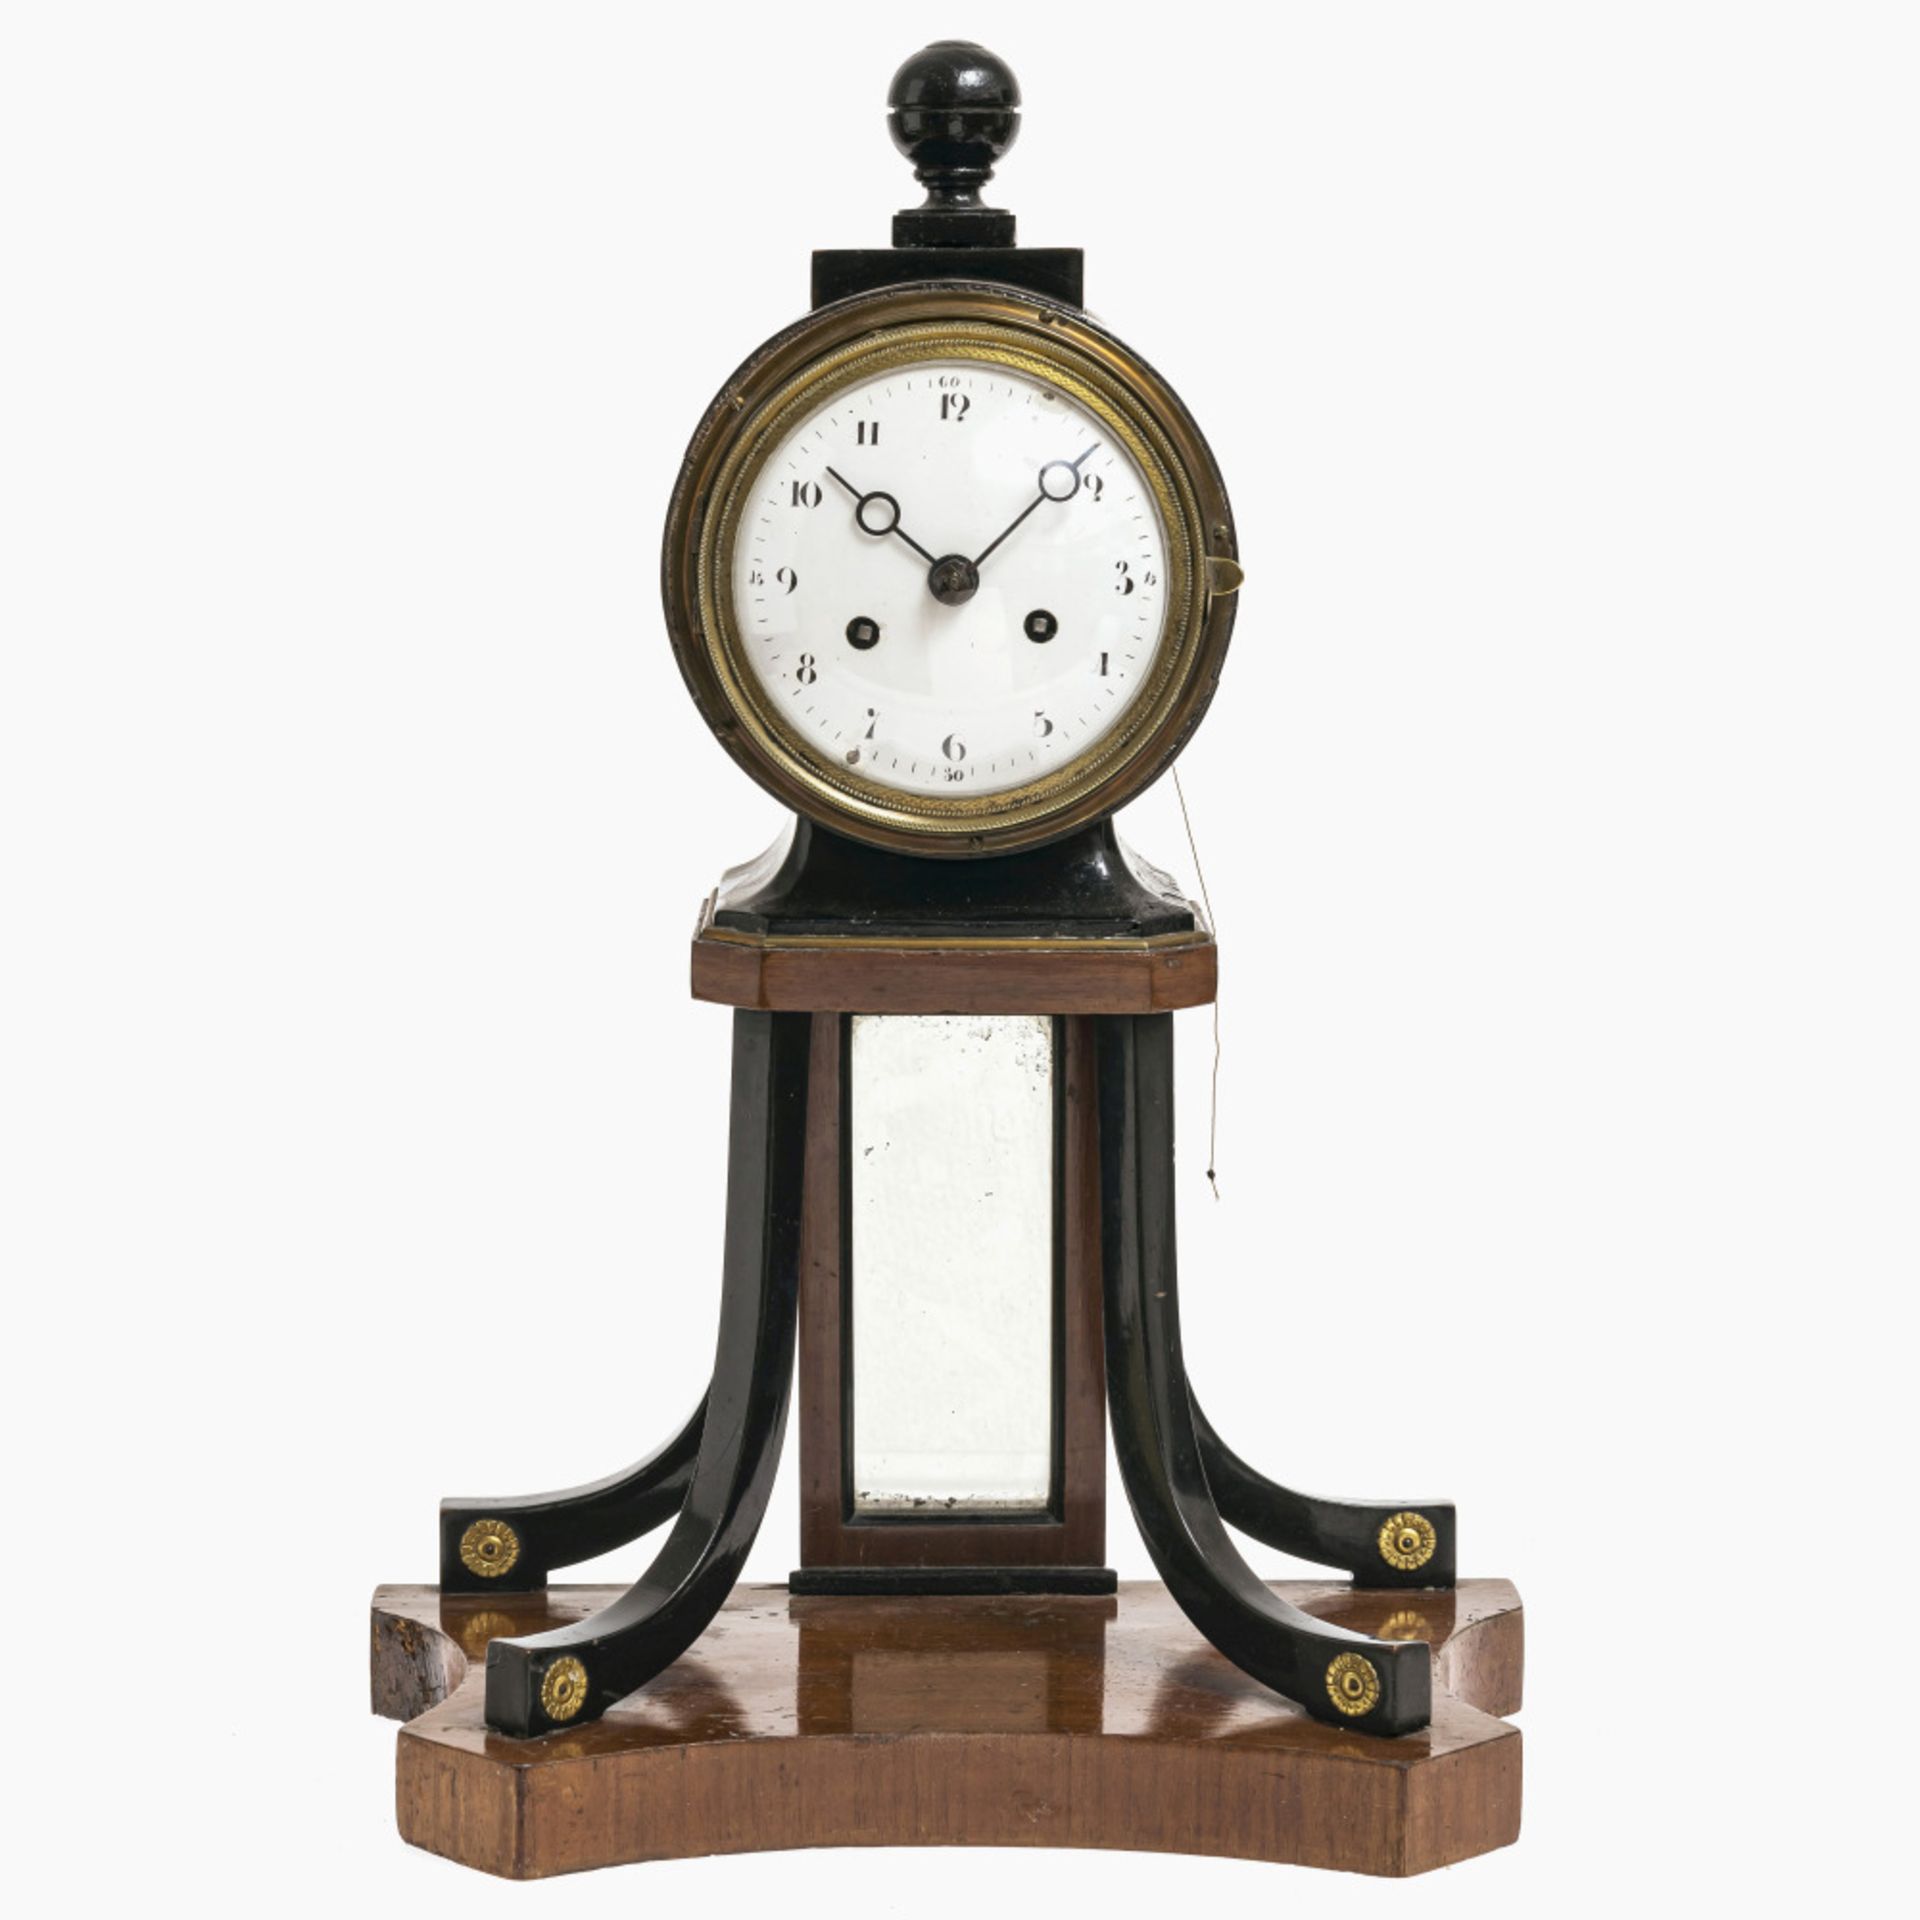 A bracket clock